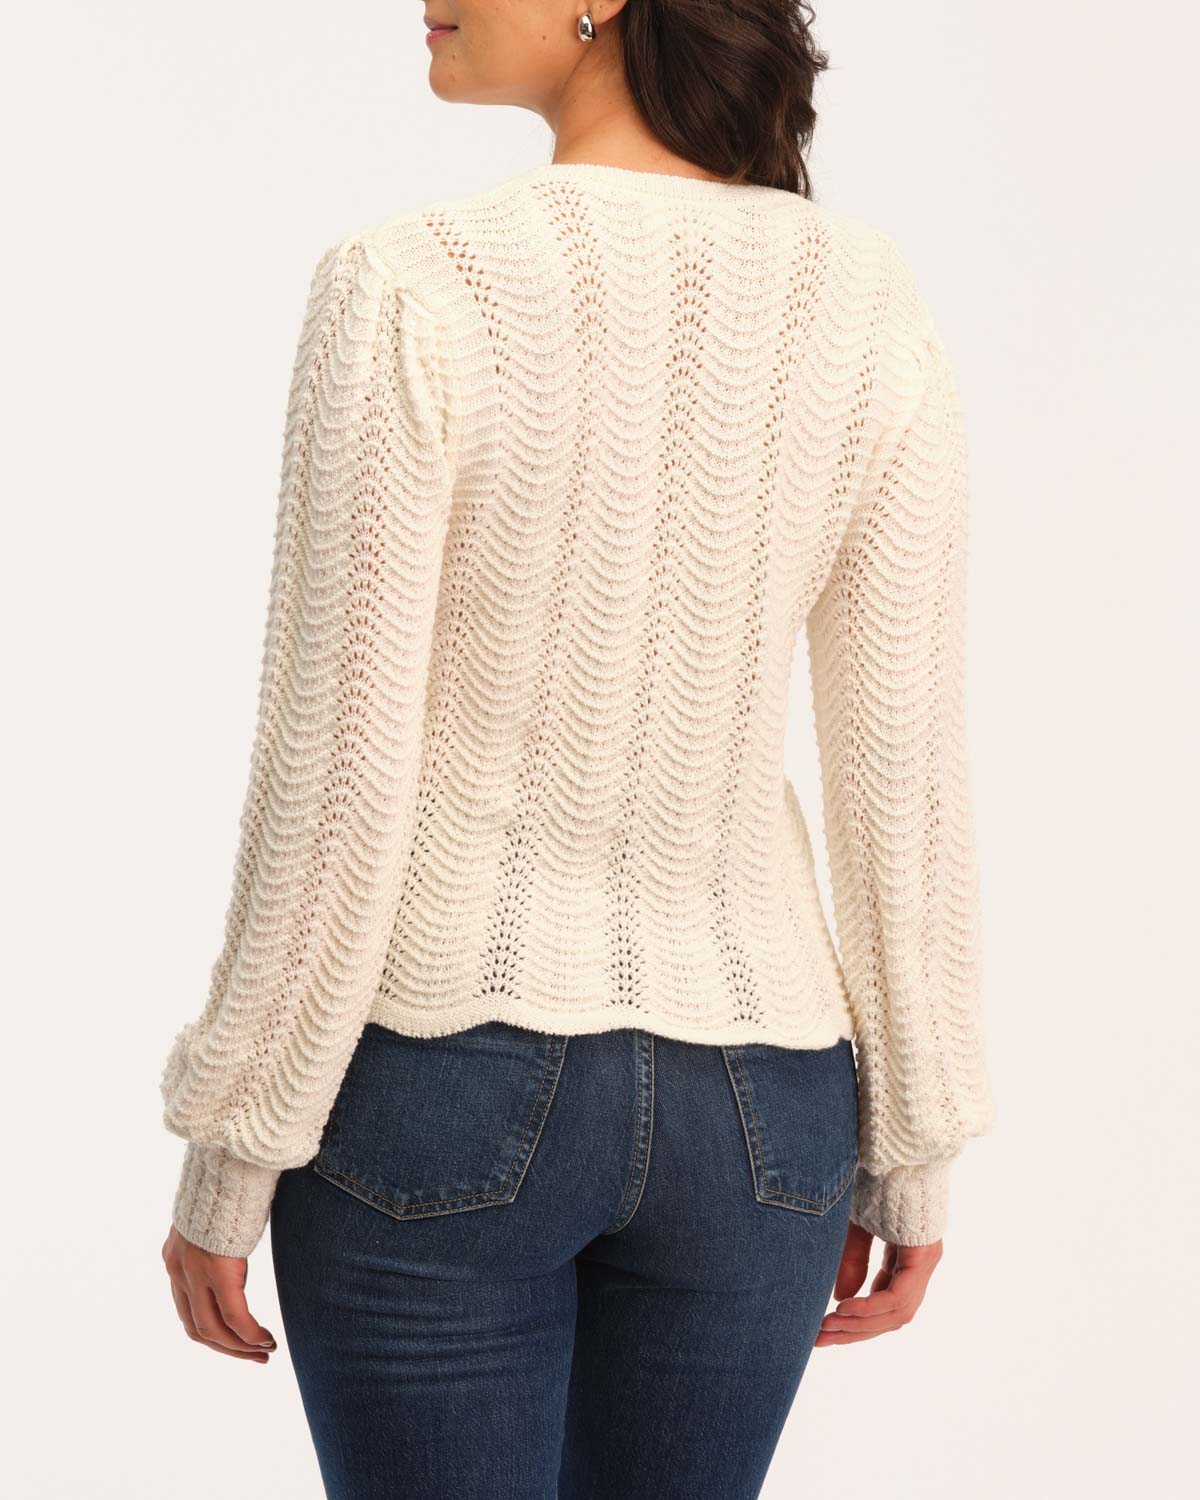 Shop Chelsea & Theodore Women's Puff Sleeve Ripple Pattern Sweater | JANE + MERCER